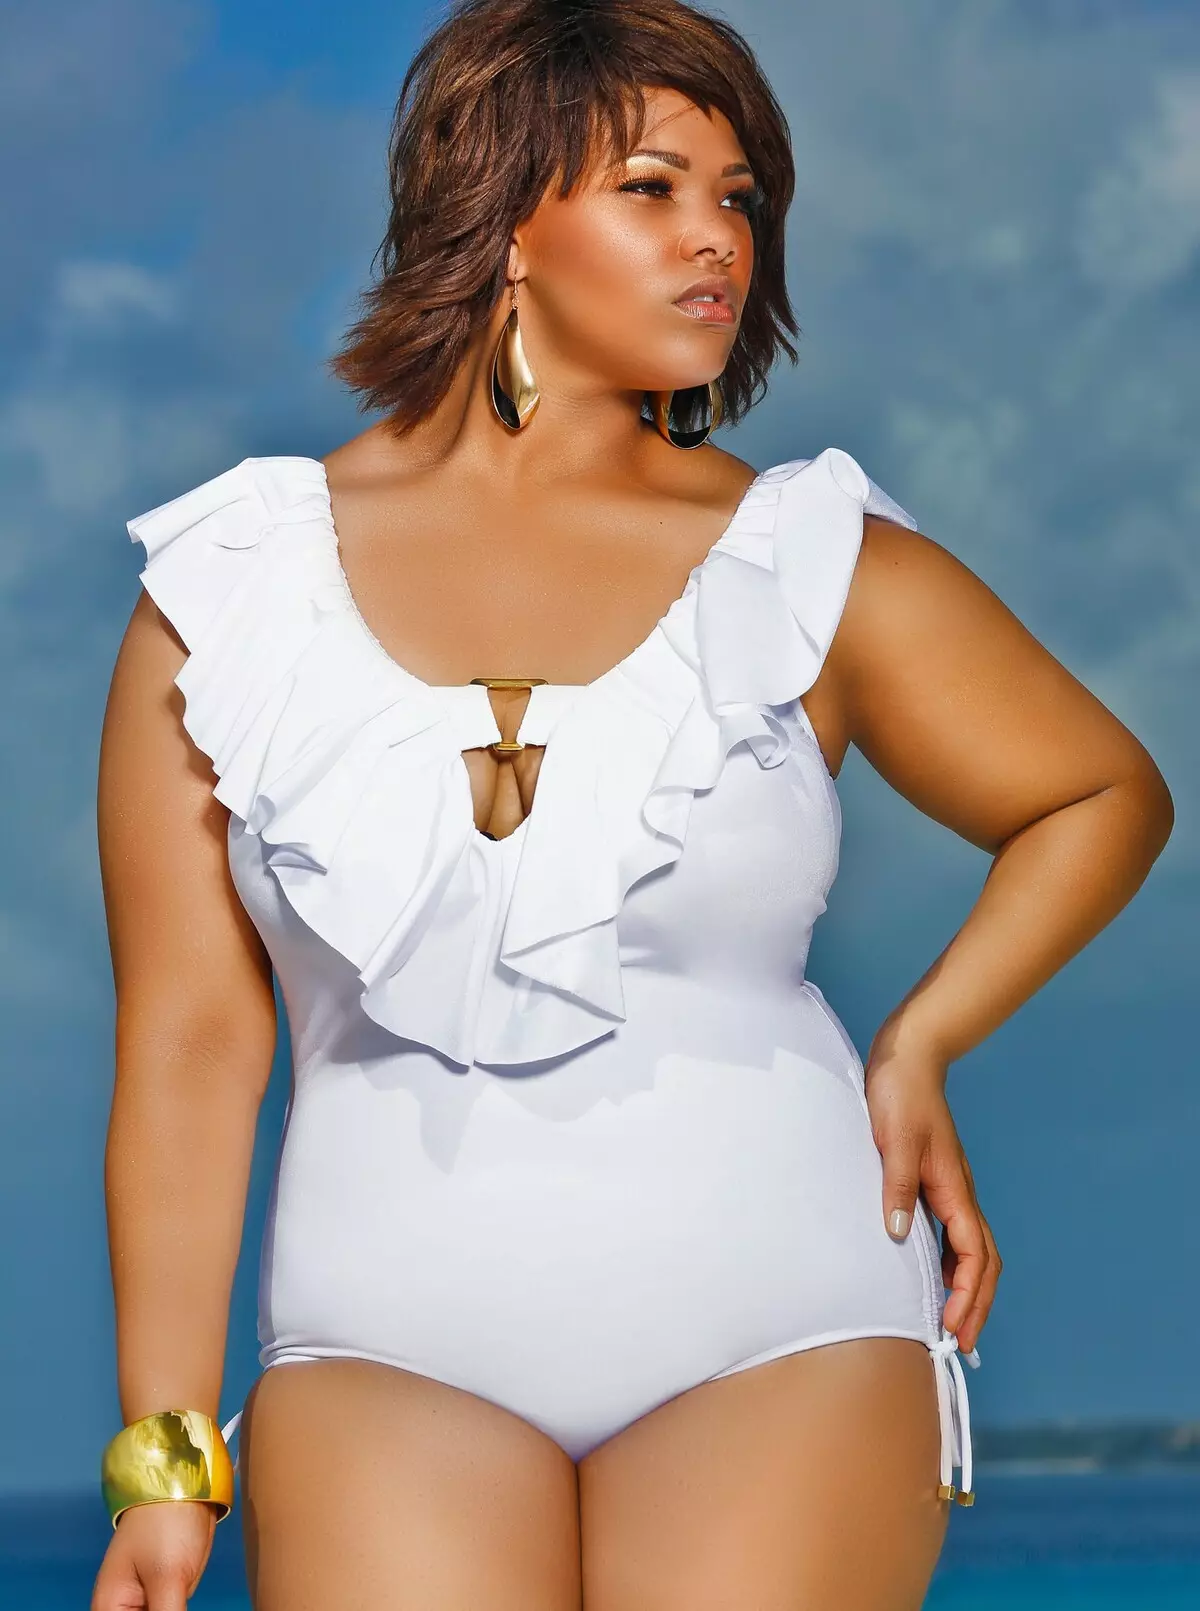 White Swimsuit (73 사진) : 아름다운 여성 모델, 항아리 화이트 버블 수영복, 폴카 도트 모델 1557_15